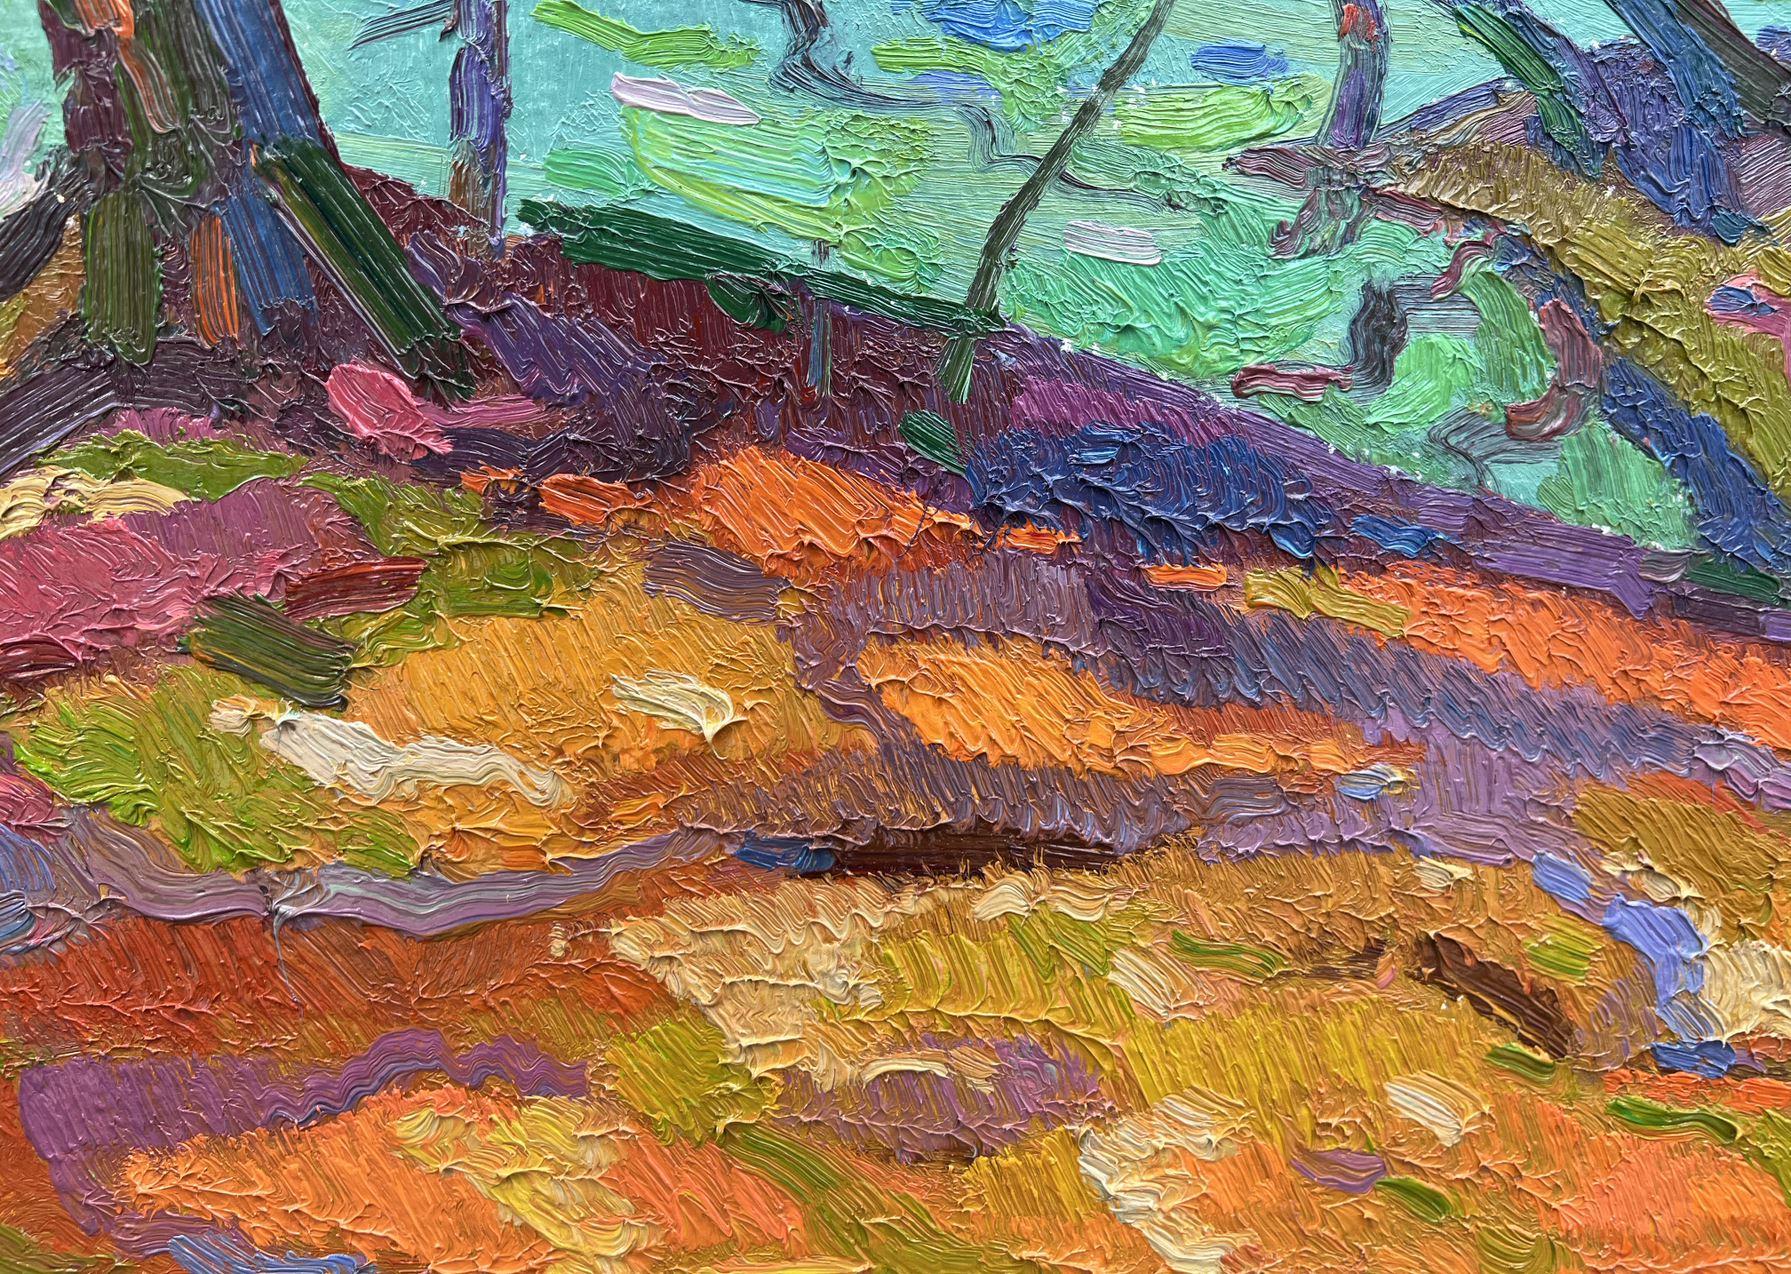 Artist: Peter Tovpev
Work: Original oil painting, handmade artwork, one of a kind 
Medium: Oil on Canvas 
Year: 2021
Style: Post Impressionism
Title: Autumn Coast
Size: 25.5